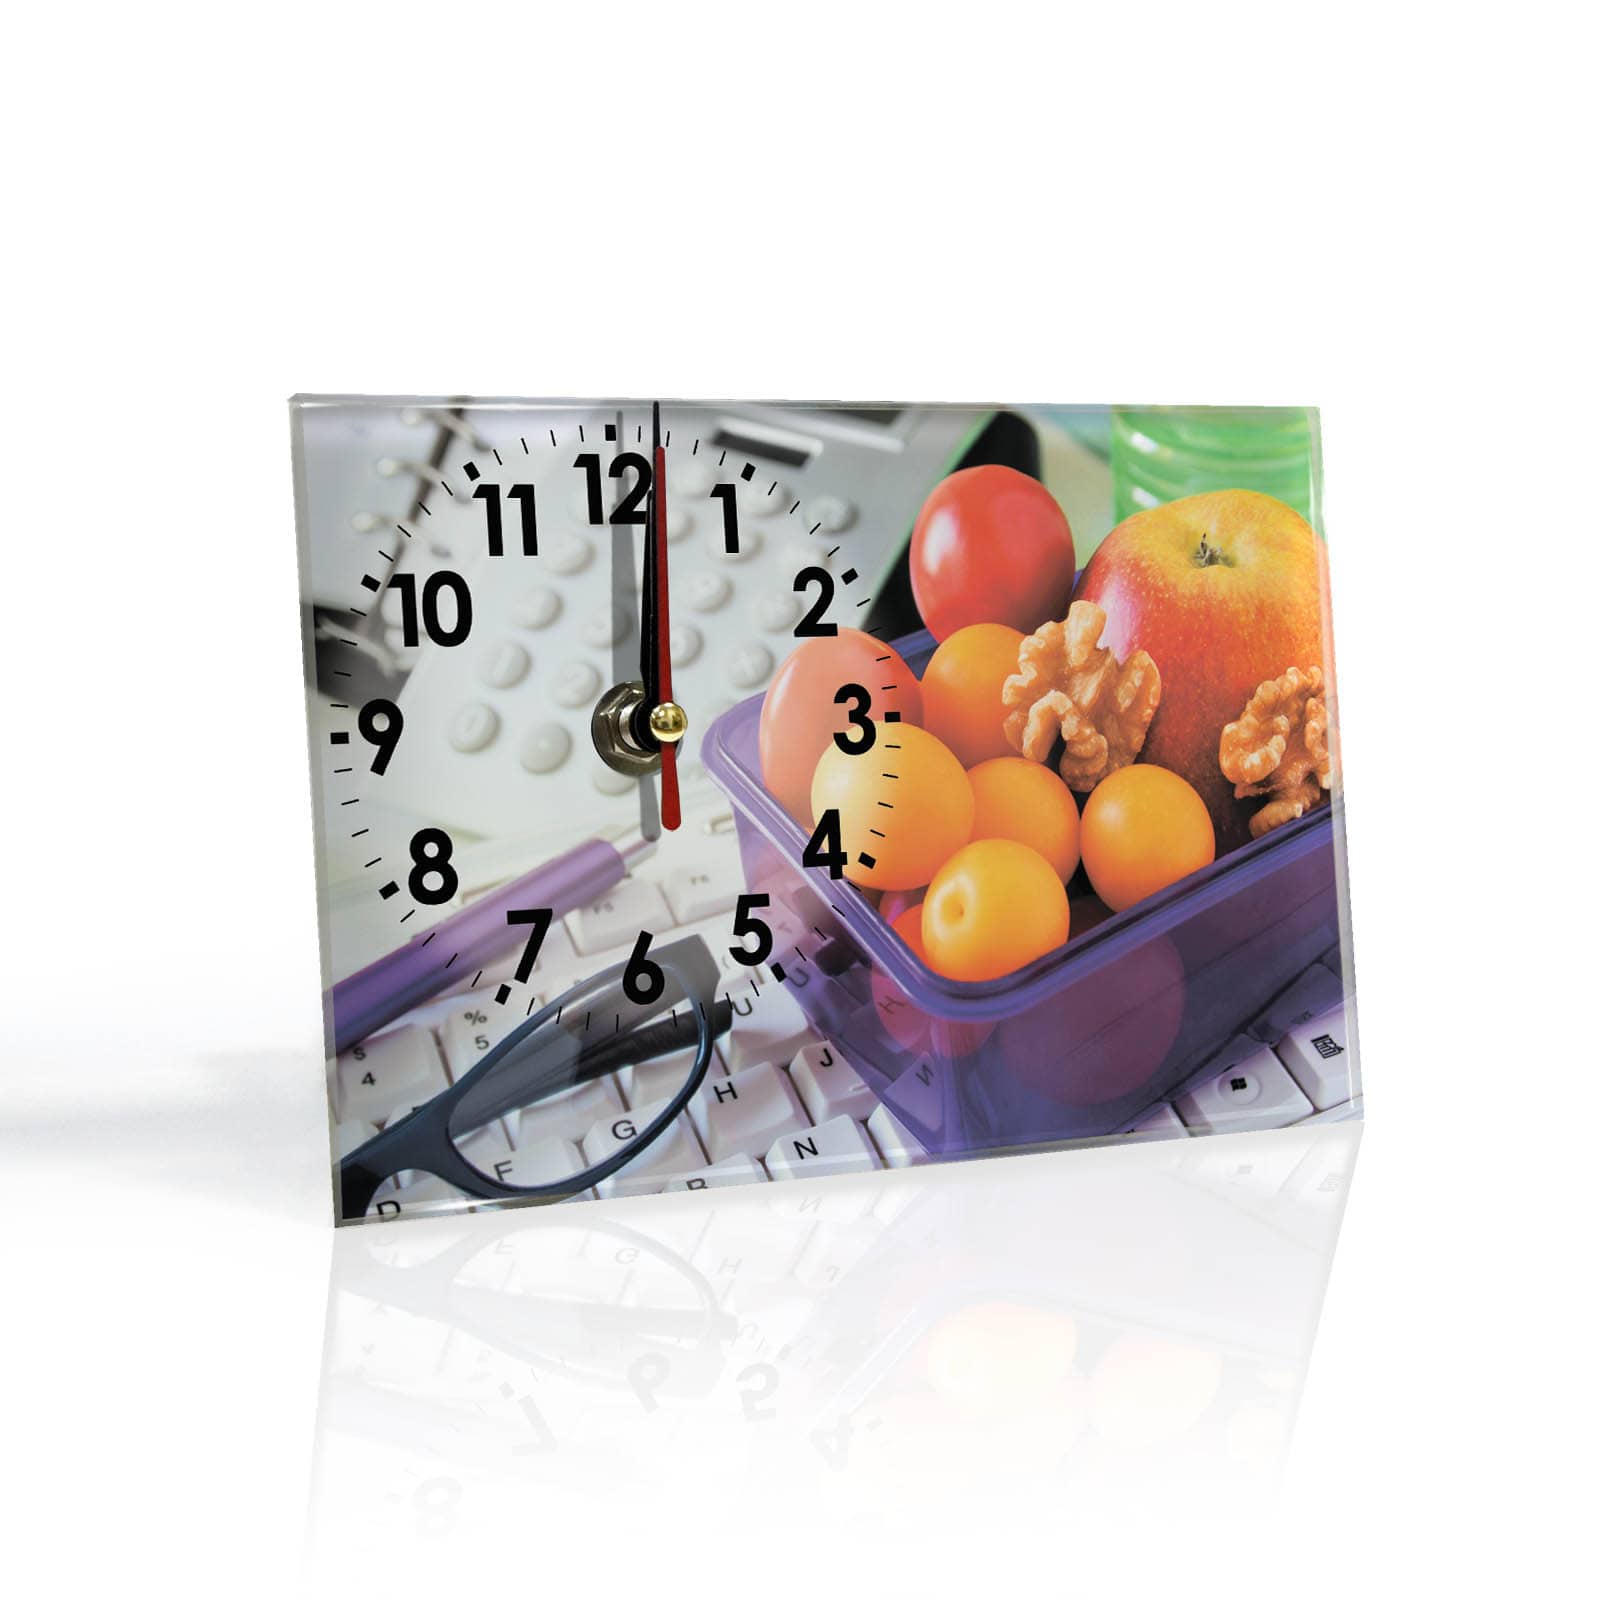 Часы с фруктами на кухню. Часы настенные на кухню прямоугольные. Настенные часы цитрус. Часы сюжет.